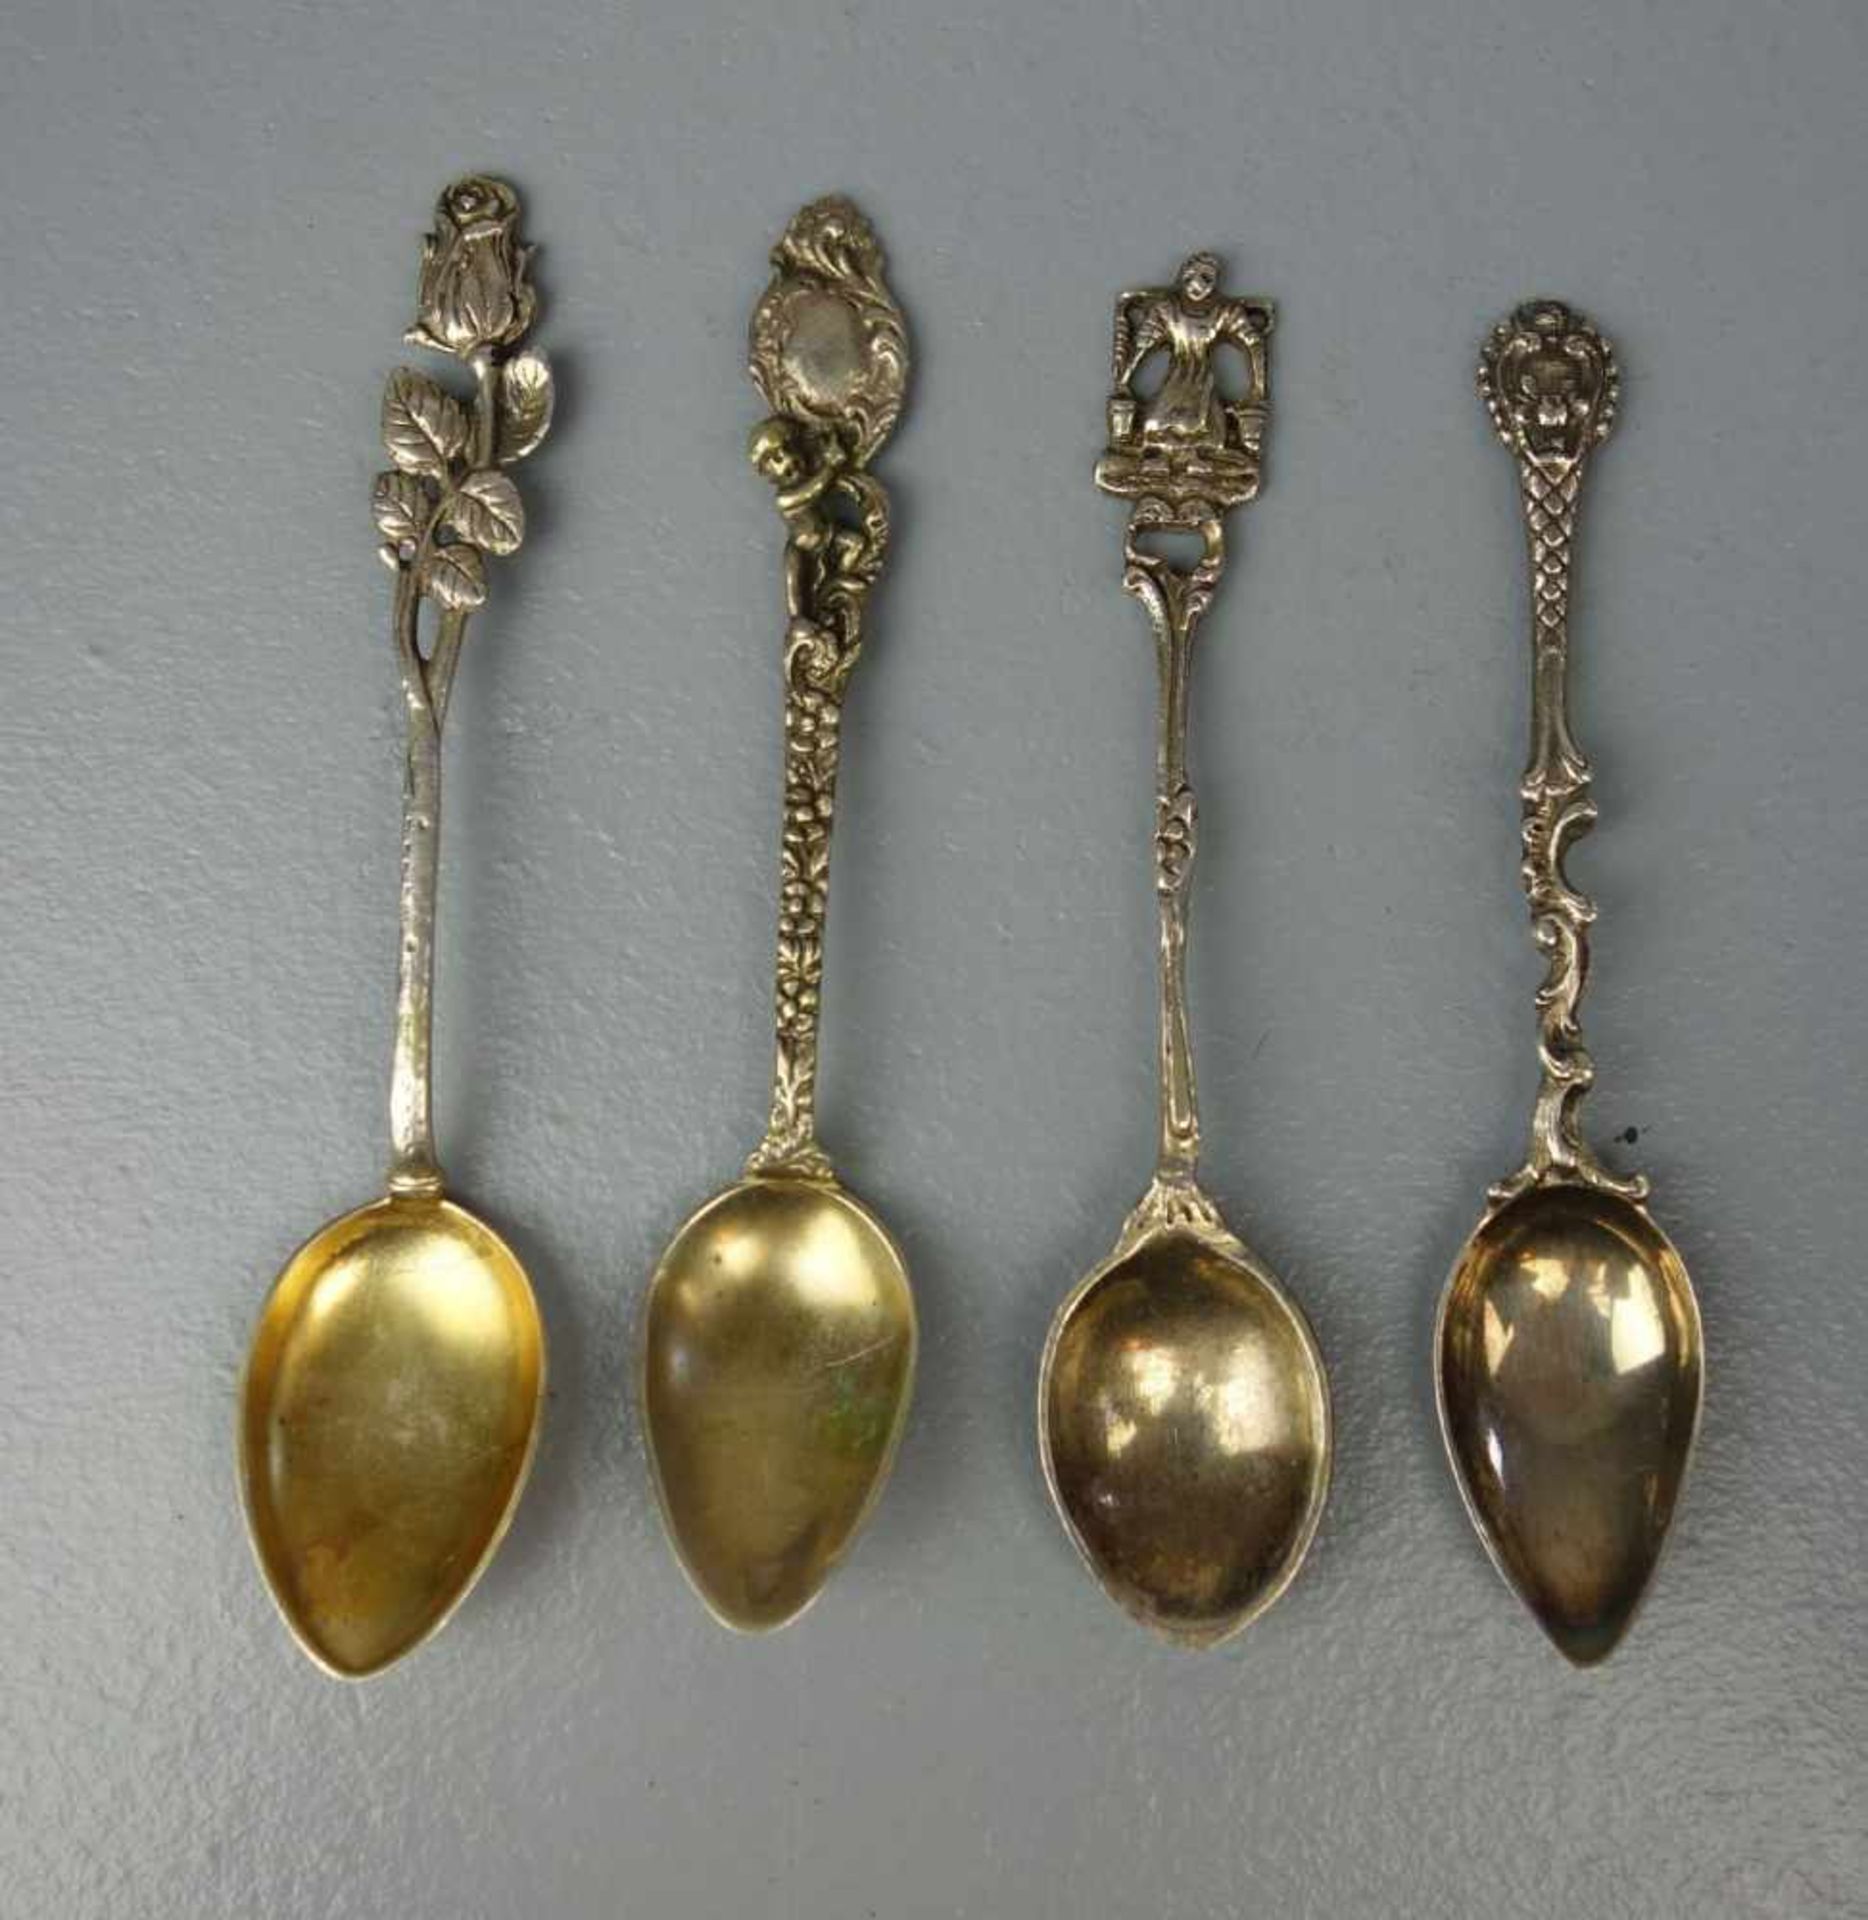 8 KLEINE LÖFFEL / MOKKALÖFFEL / mocha spoons, 20. Jh., Silber, Laffen partiell mit Restvergoldung. - Image 4 of 5